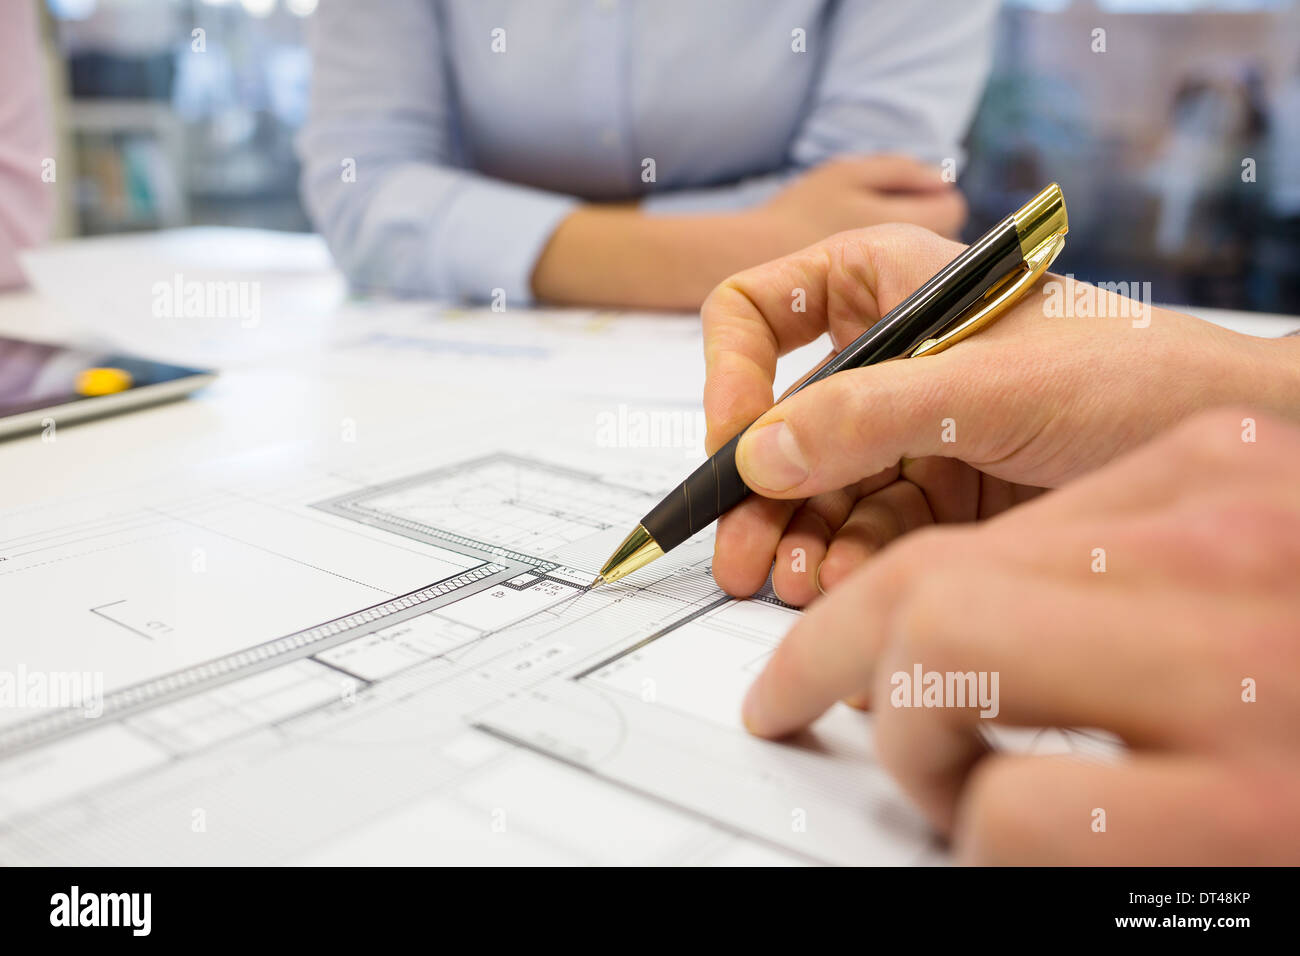 Business team desk architect man woman digital tablet blueprint construction Stock Photo